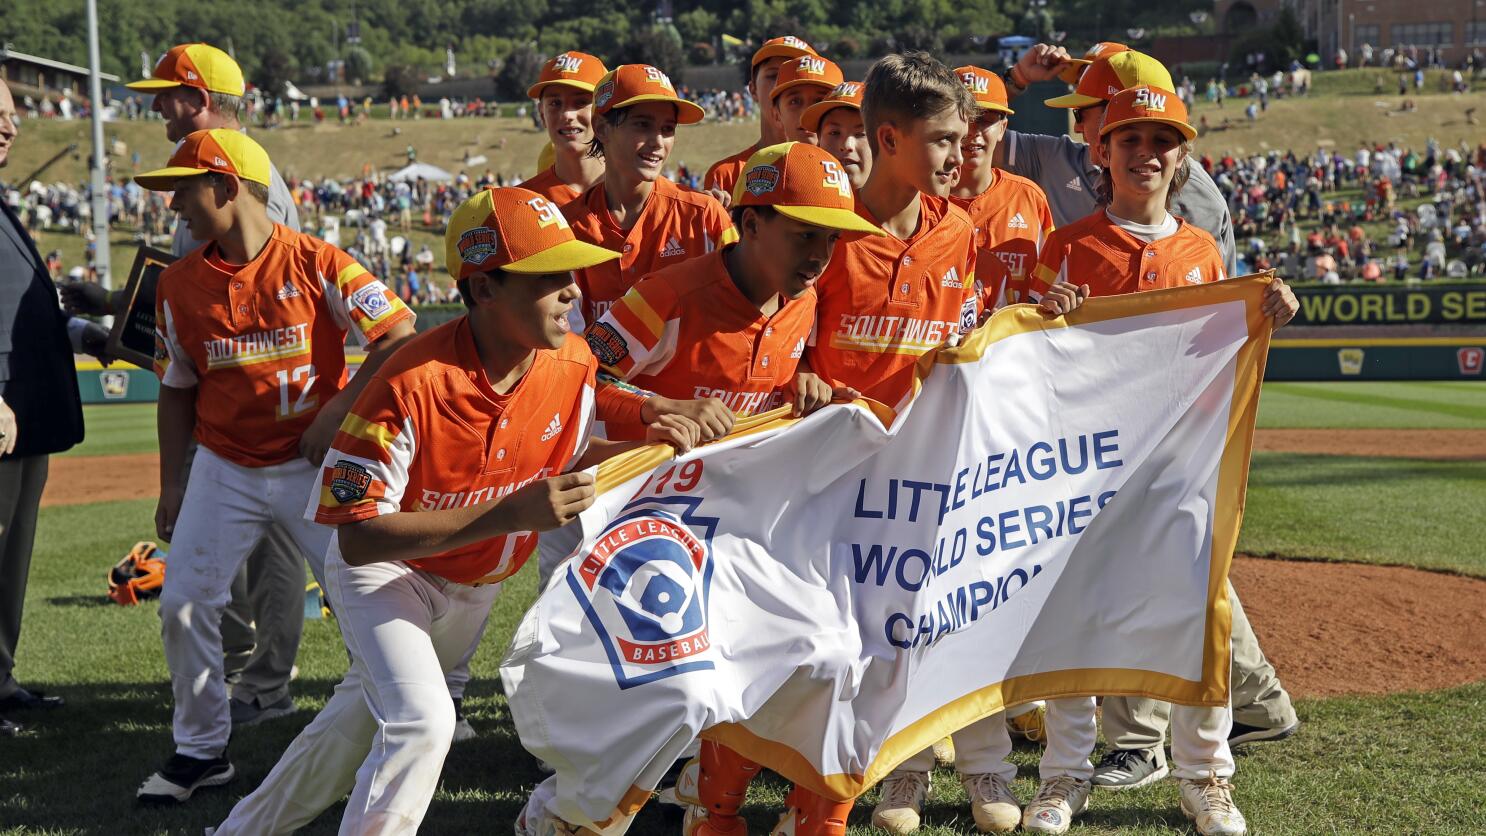 Hawaii beats Curacao to win Little League World Series title